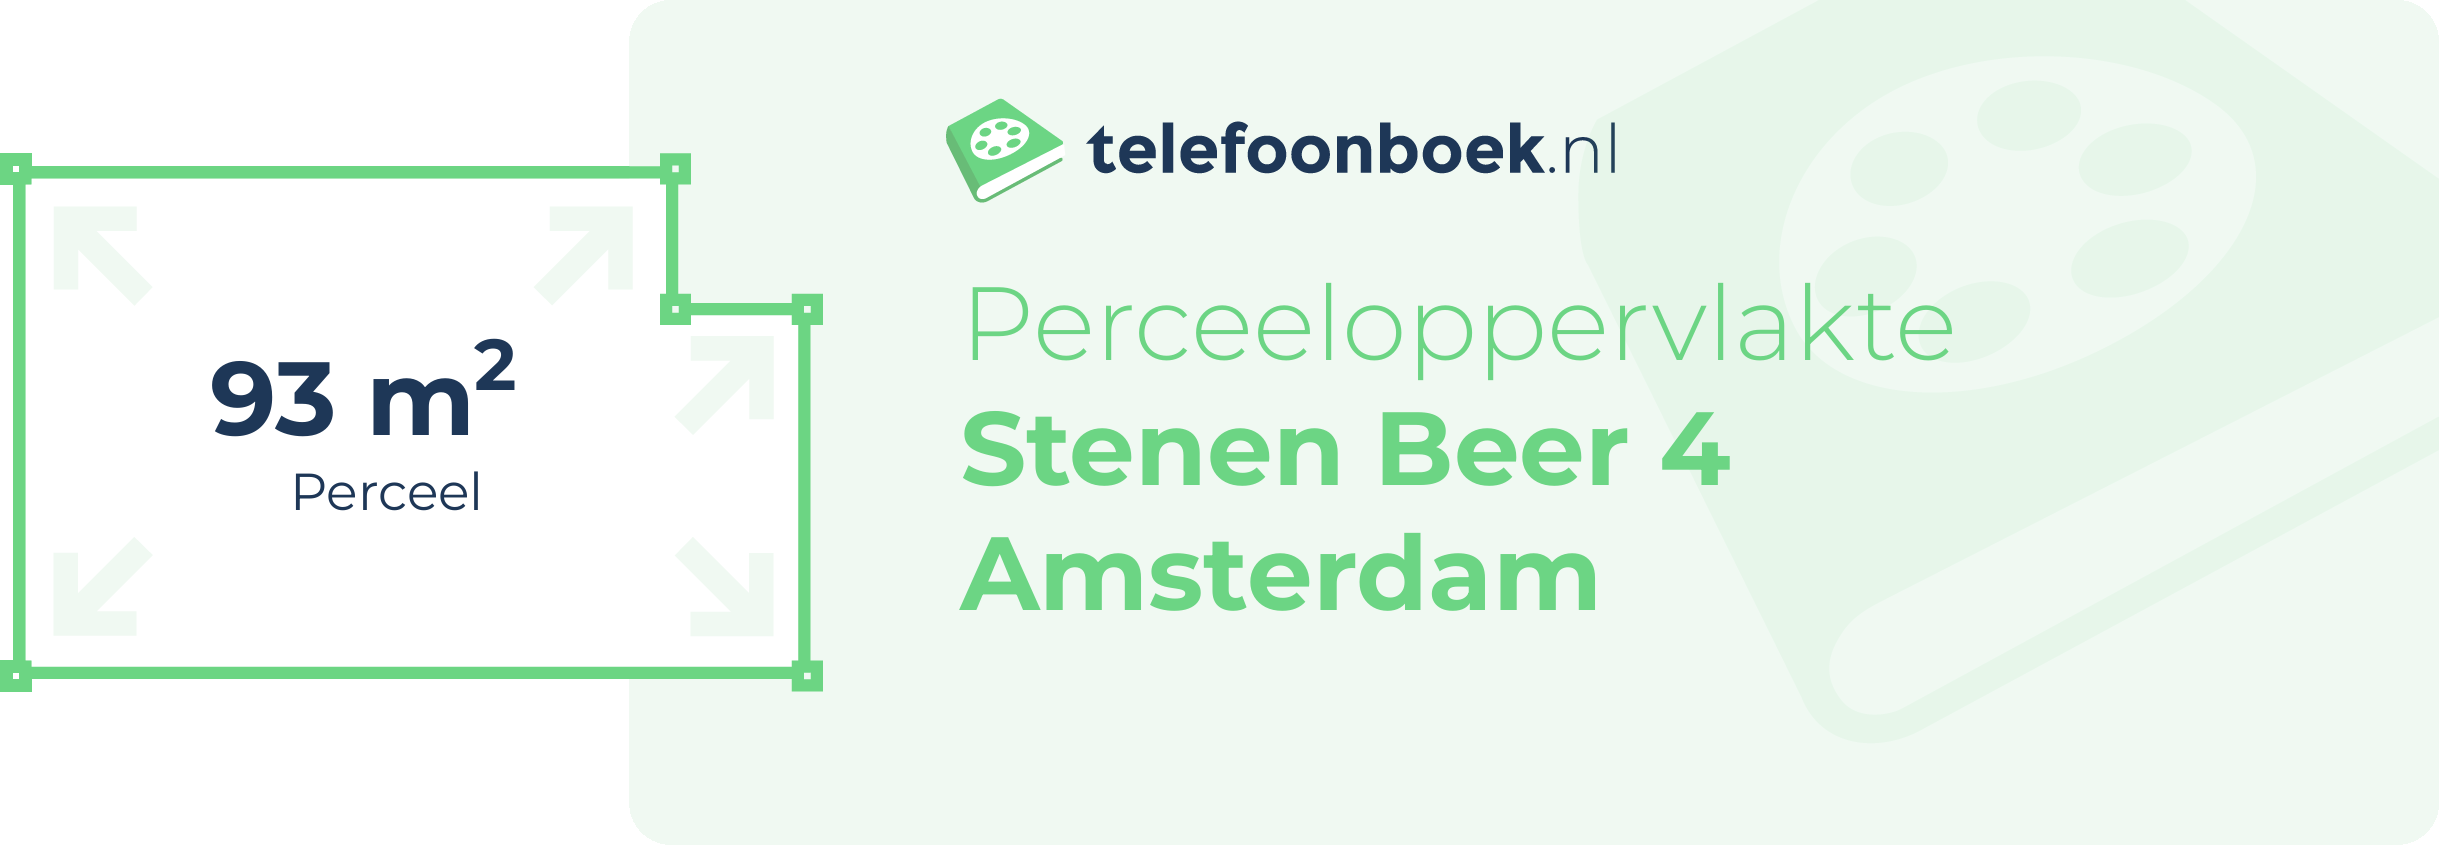 Perceeloppervlakte Stenen Beer 4 Amsterdam